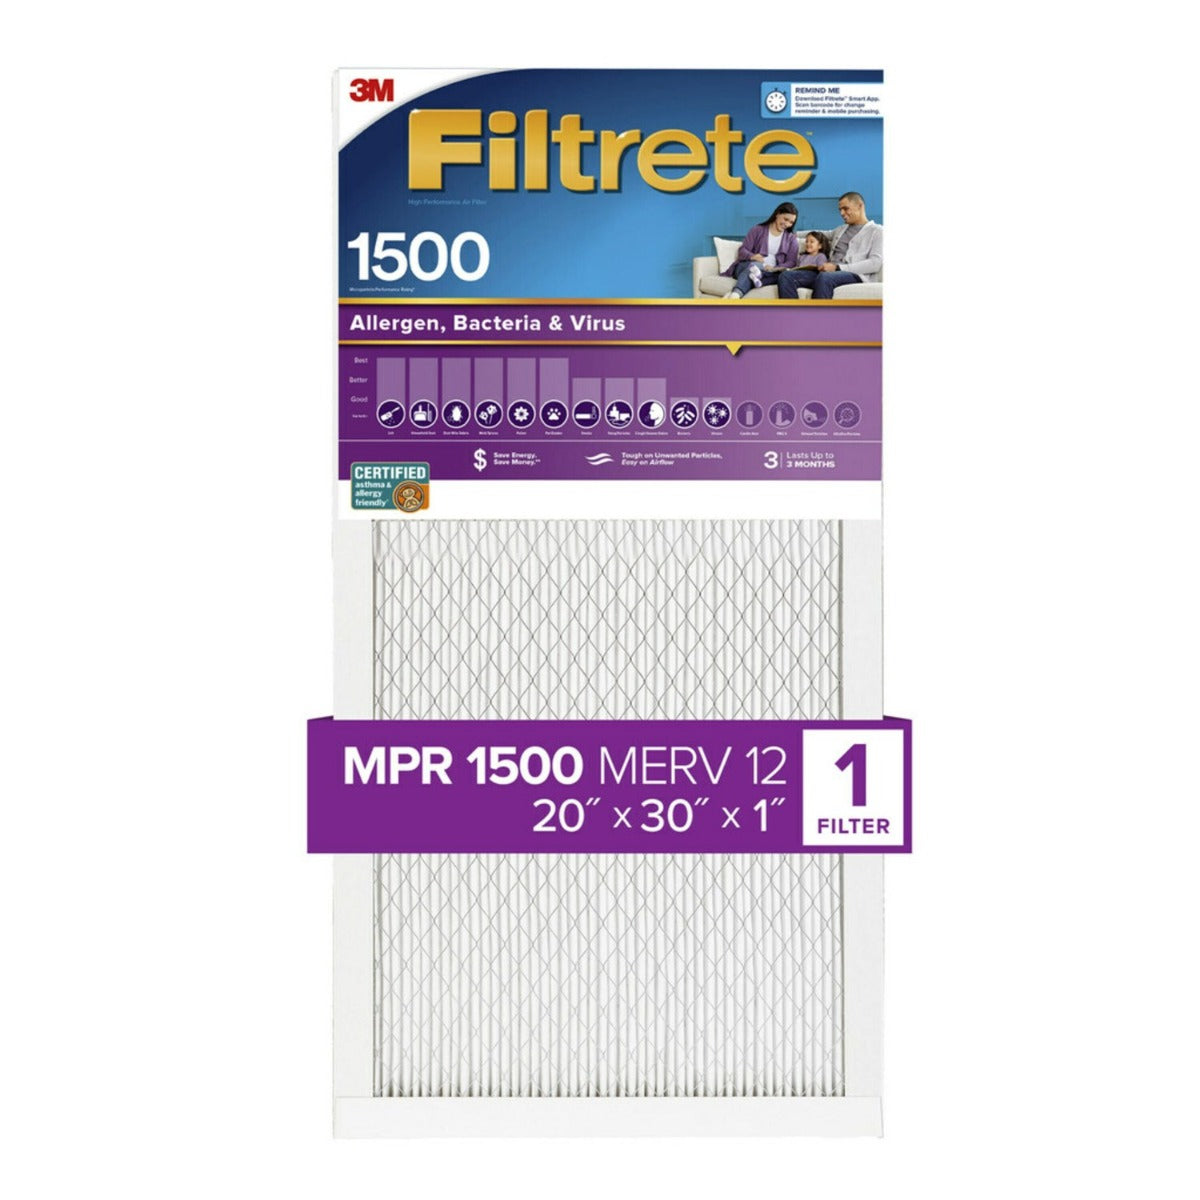 3M Filtrete 1500 Ultra Allergen Reduction Air Filter - 20x30x1 (4-Pack)